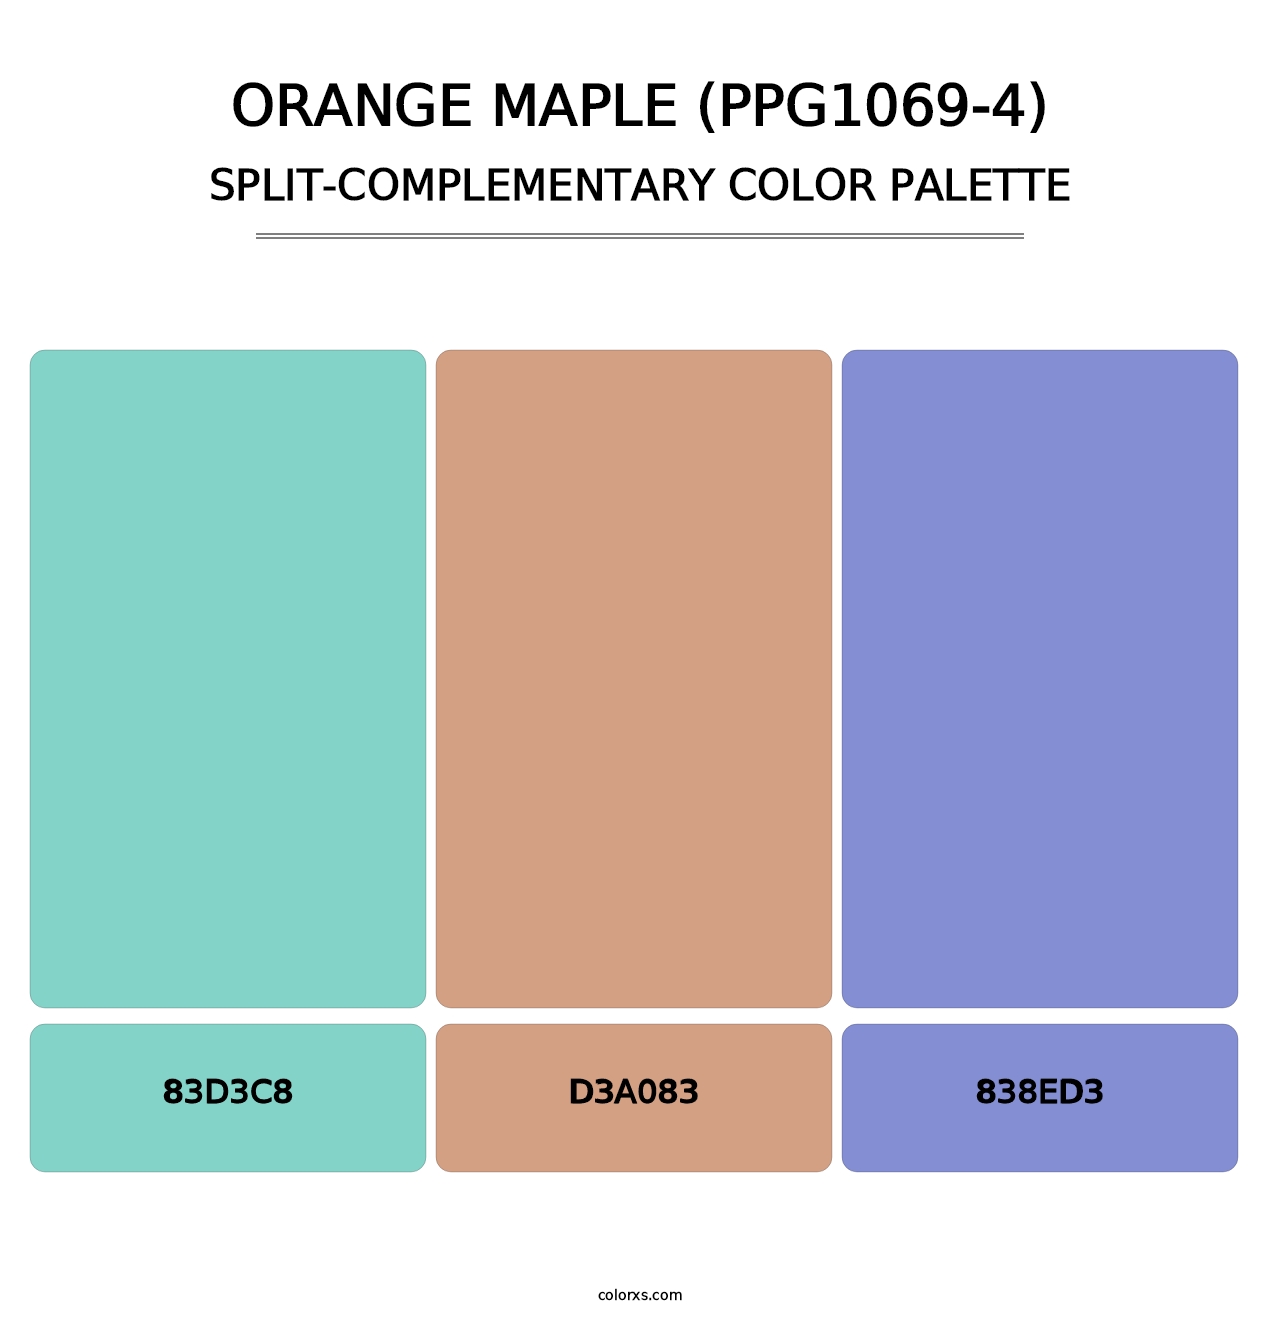 Orange Maple (PPG1069-4) - Split-Complementary Color Palette